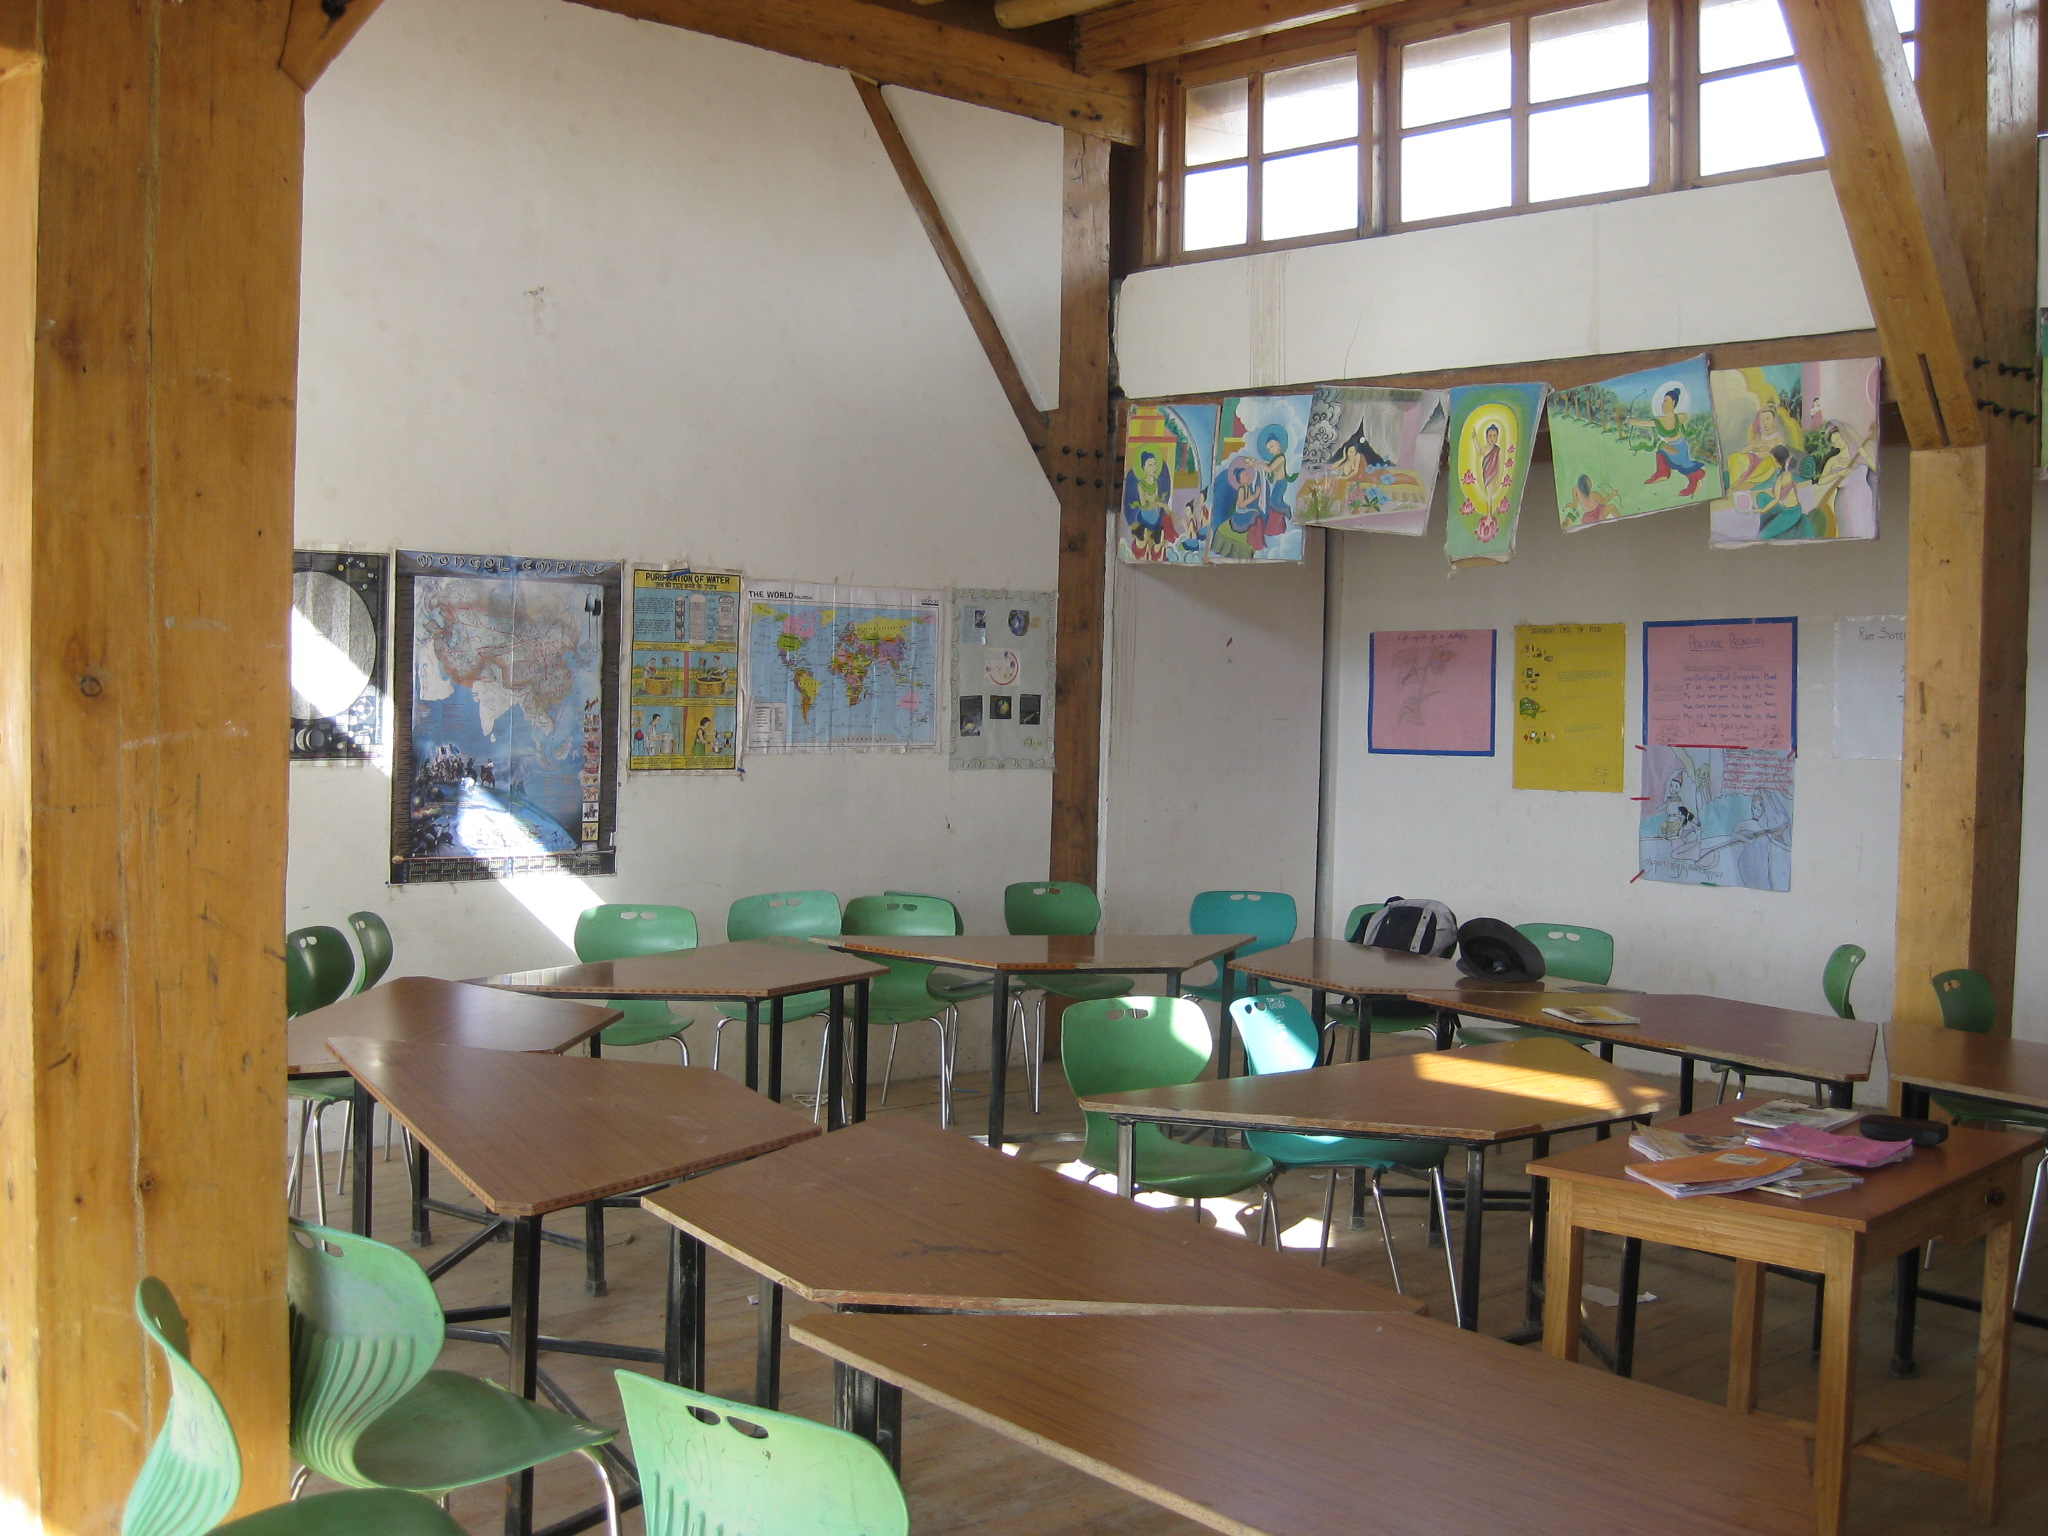 2011 Secondary classroom